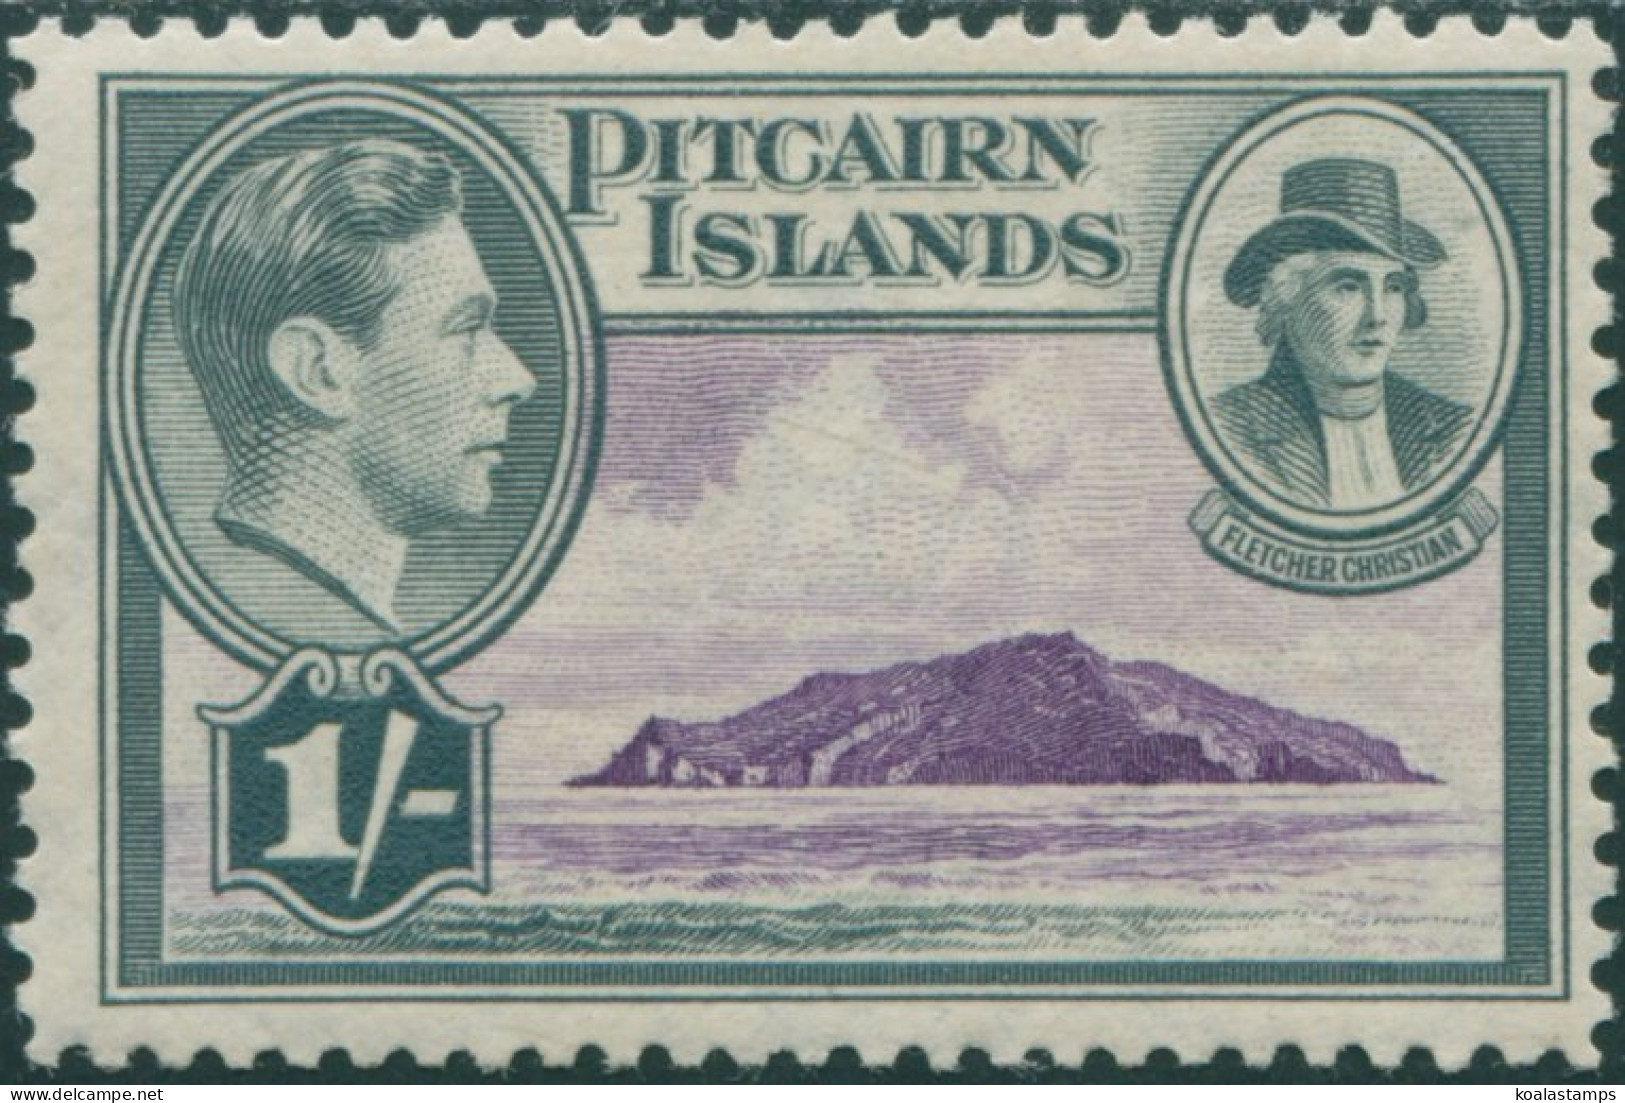 Pitcairn Islands 1940 SG7 1/- Christian And Island MNH - Pitcairn Islands